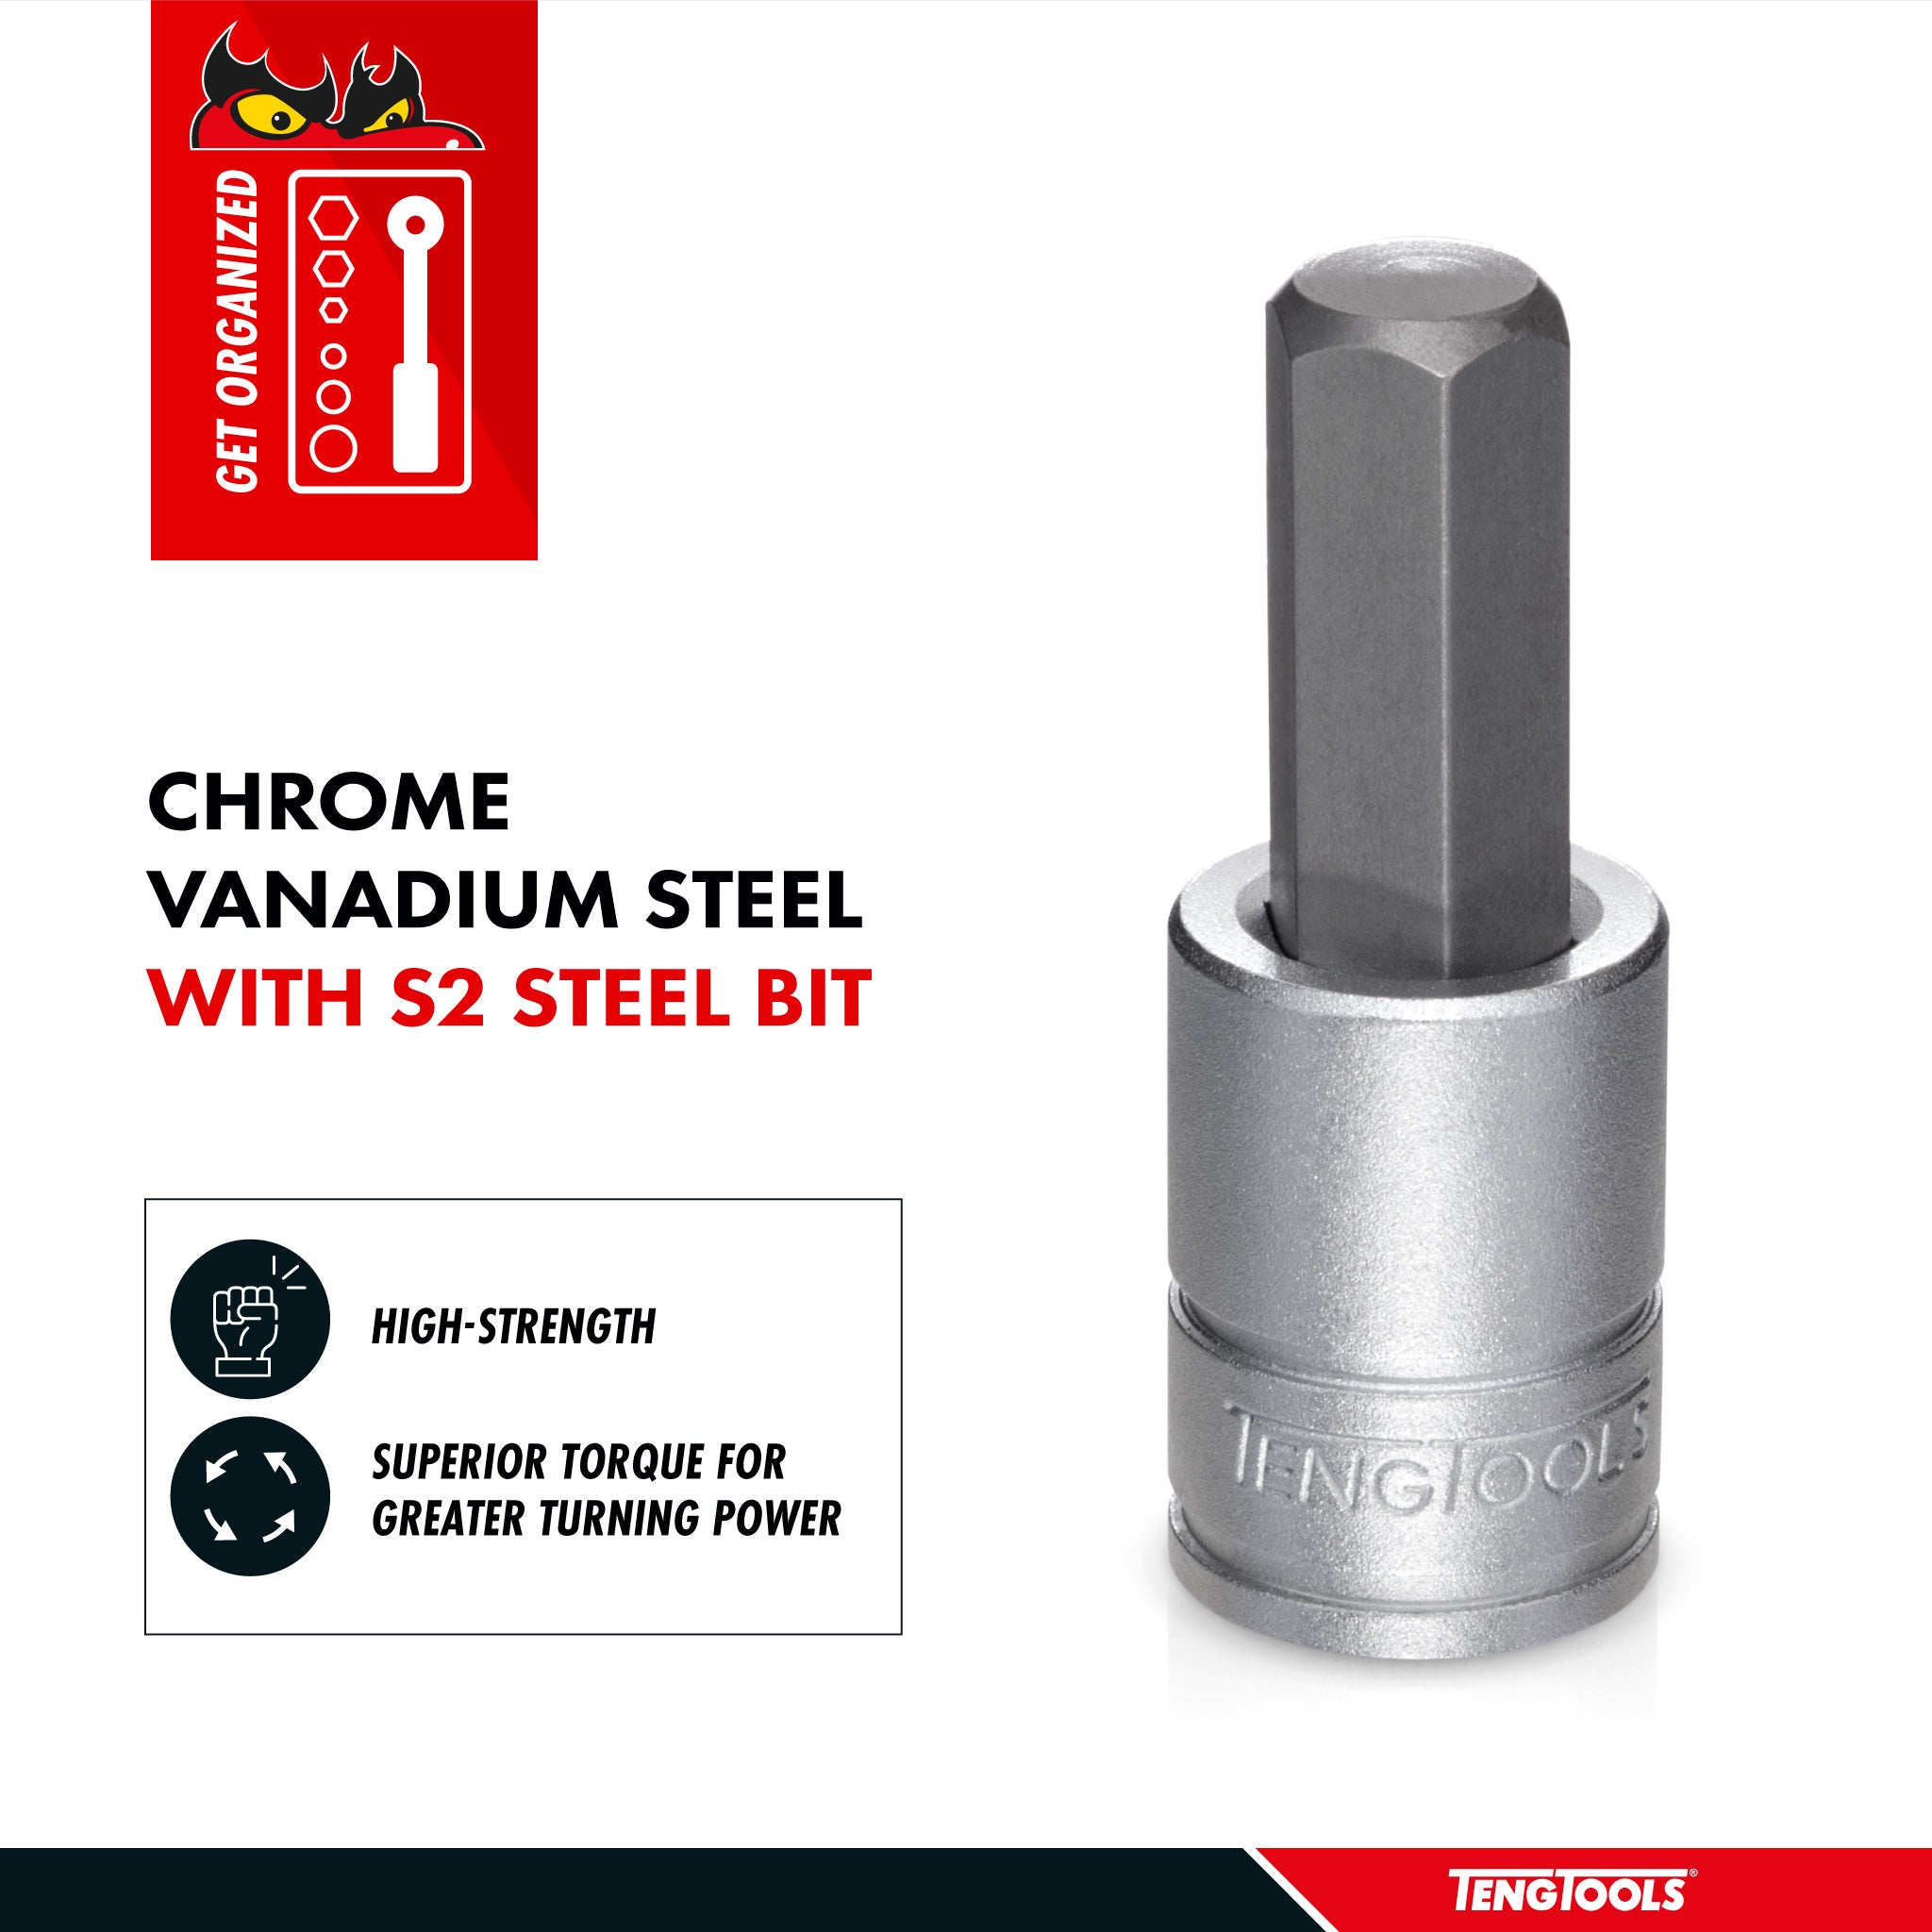 Teng Tools 1/2 Inch Drive Metric Hex Chrome Vanadium Sockets - 12mm